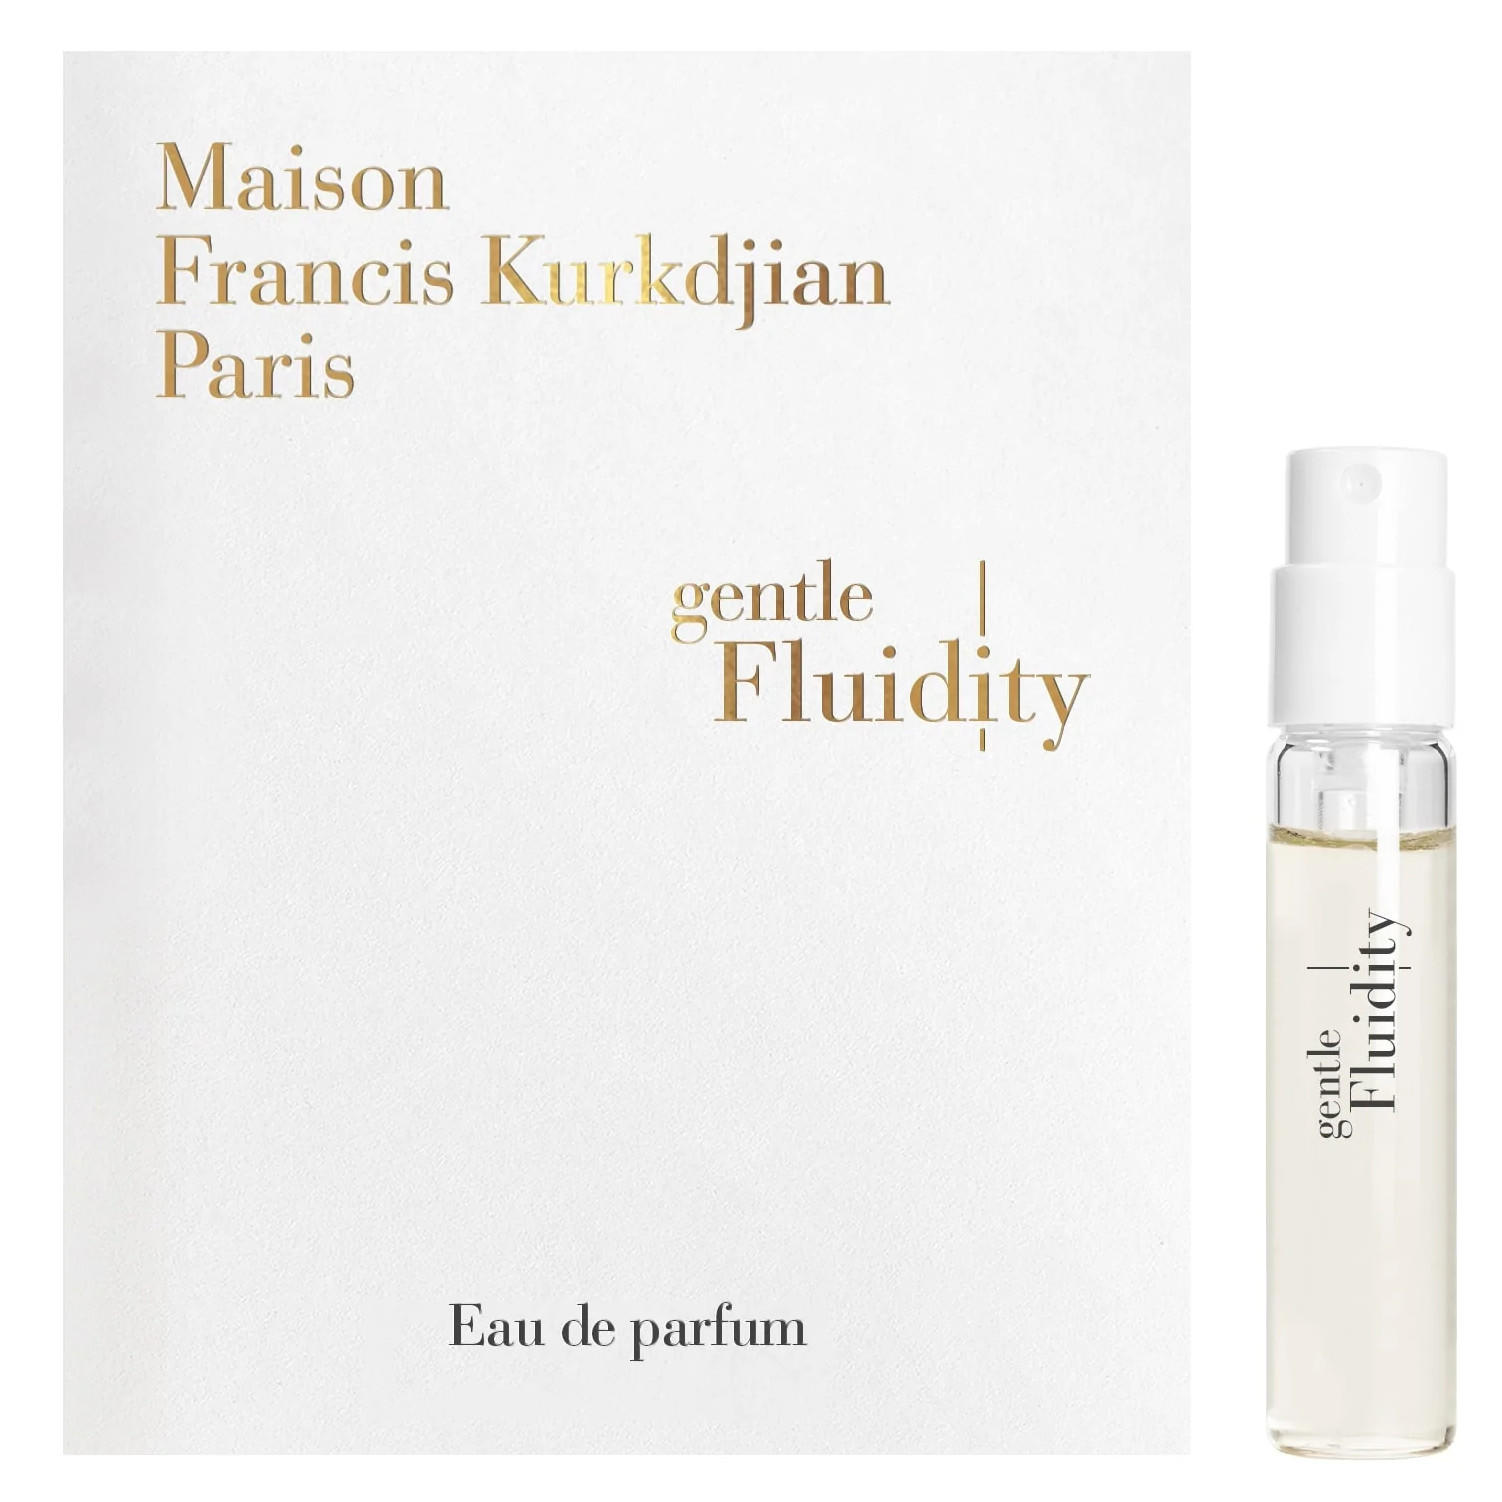 Maison Francis Kurkdjian Gentle Fluidity Gold Perfume Vial